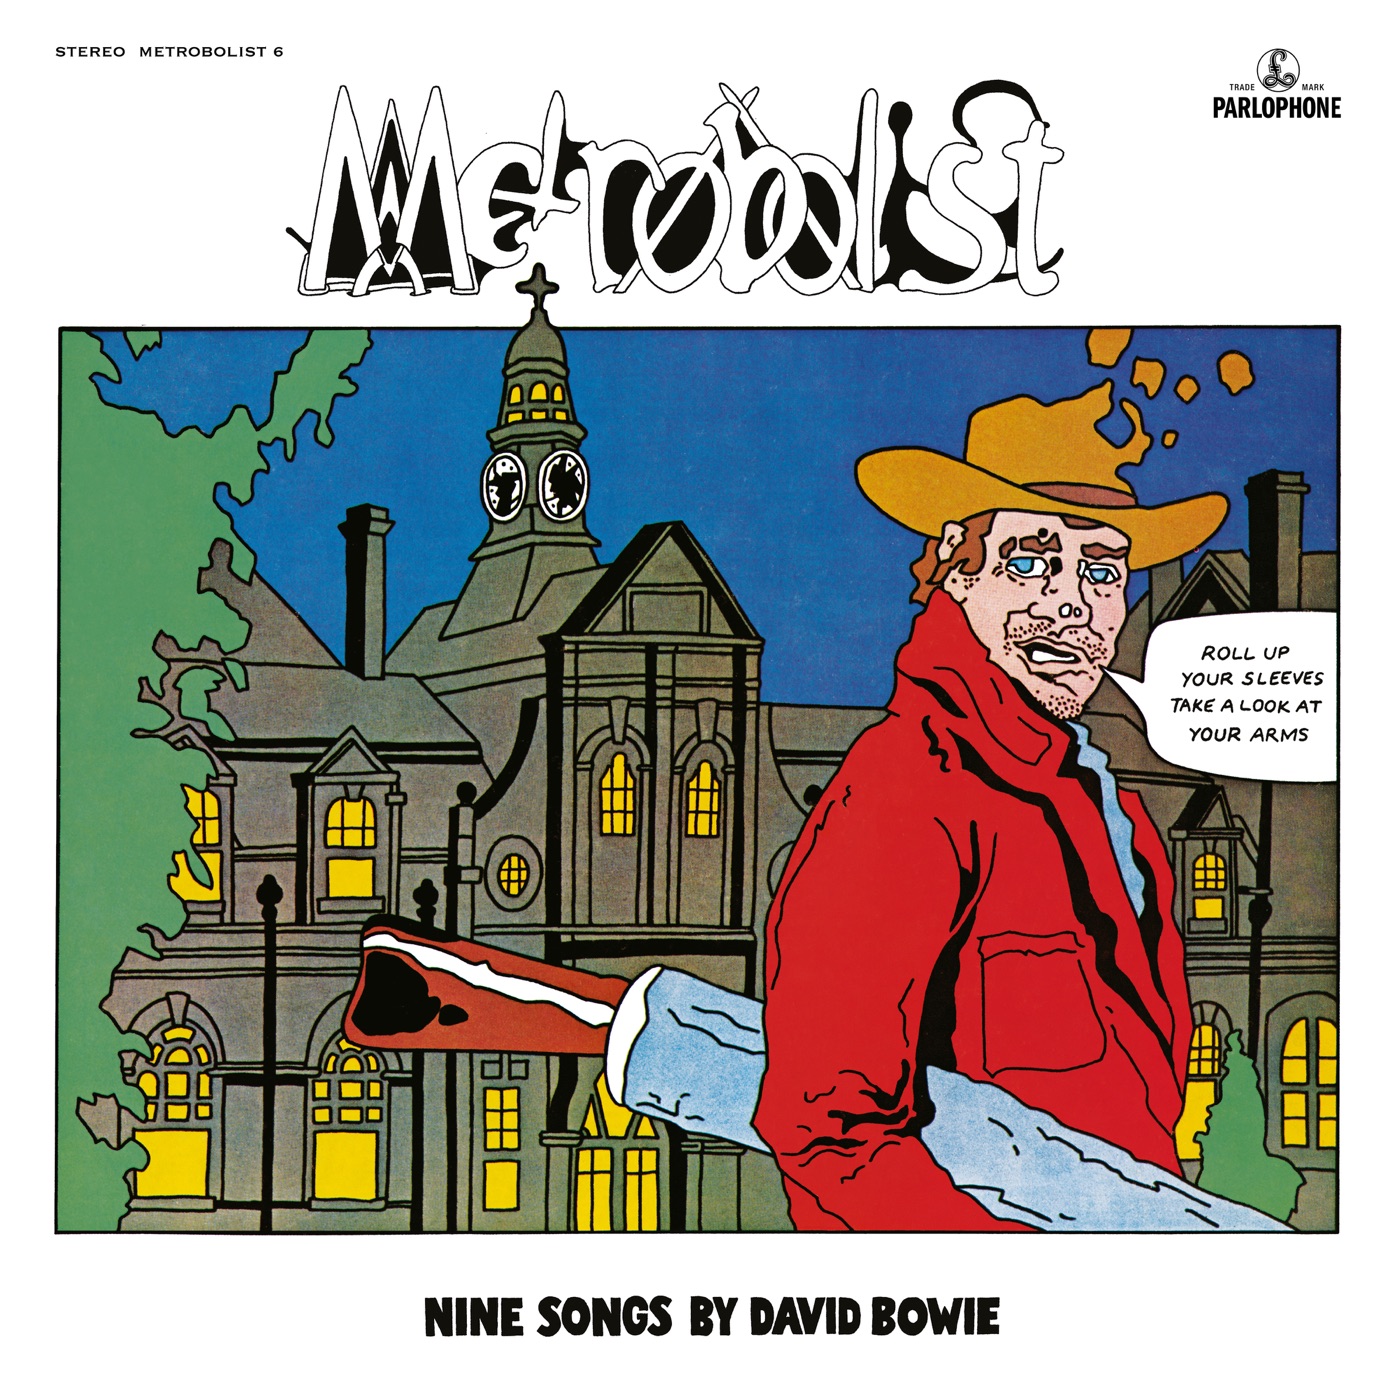 Metrobolist (aka The Man Who Sold The World) (2020 Mix) by David Bowie